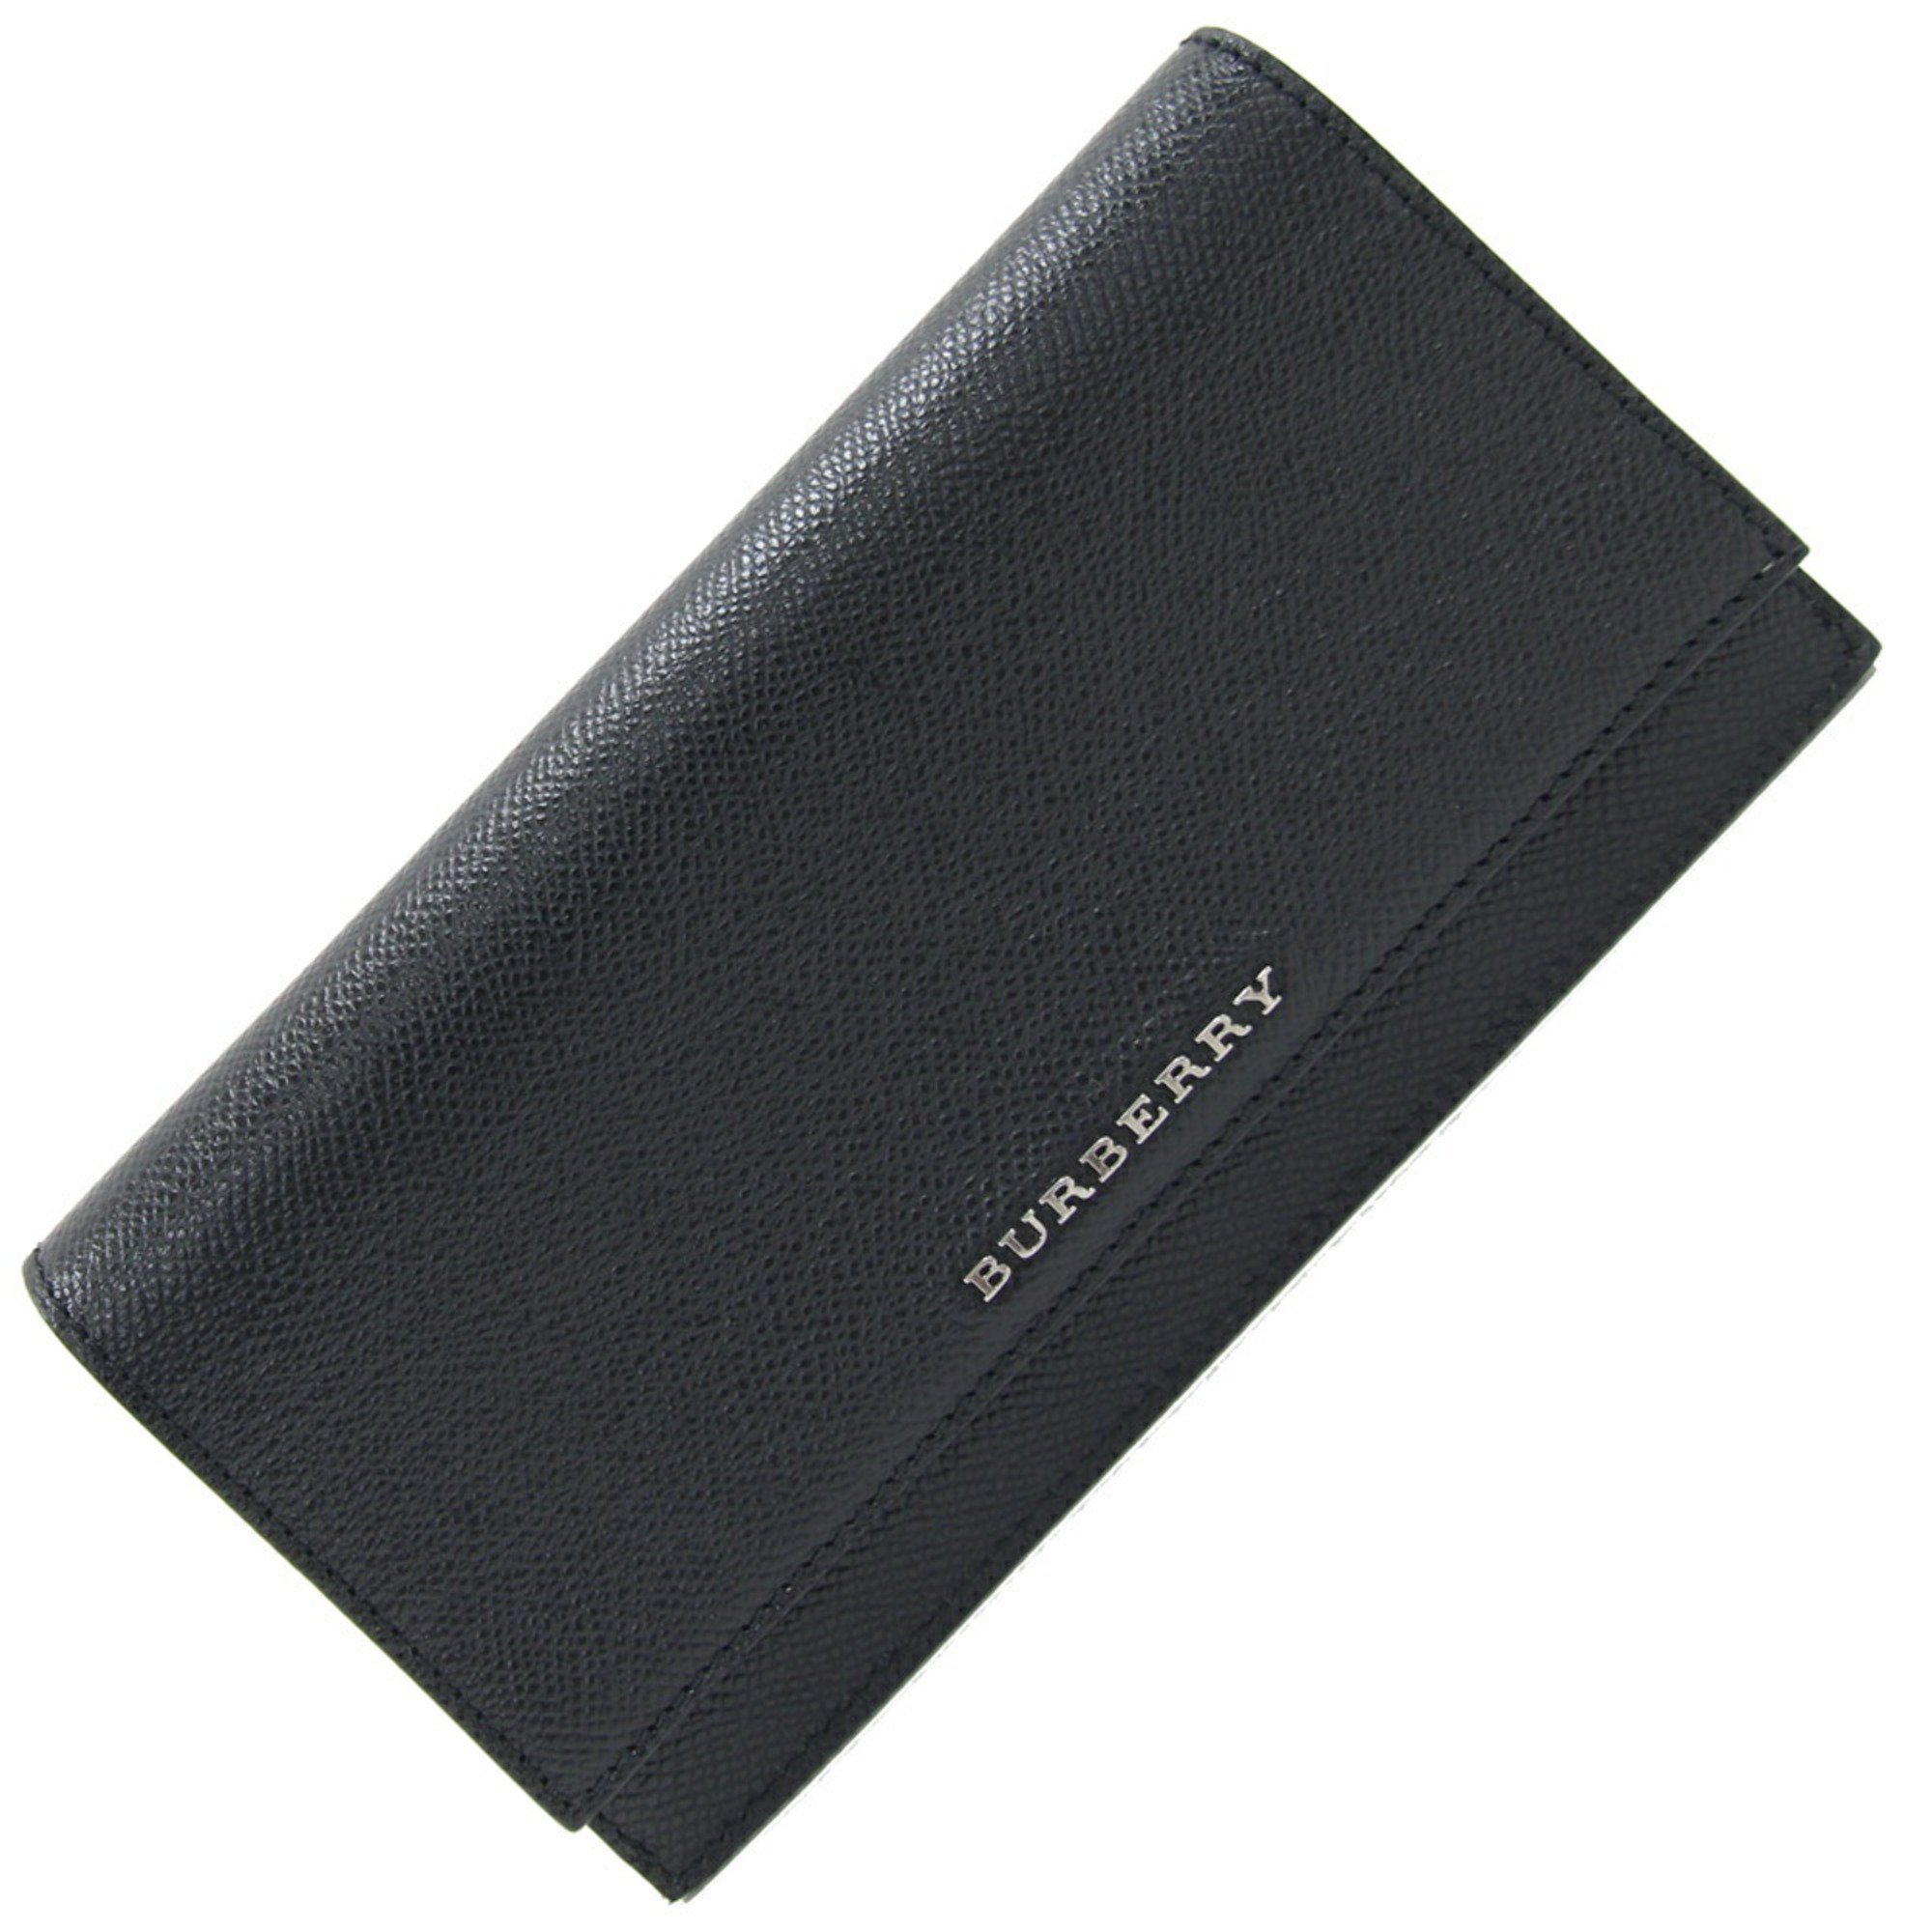 Burberry Bi-fold Long Wallet 3935510 Black Leather Men's BURBERRY